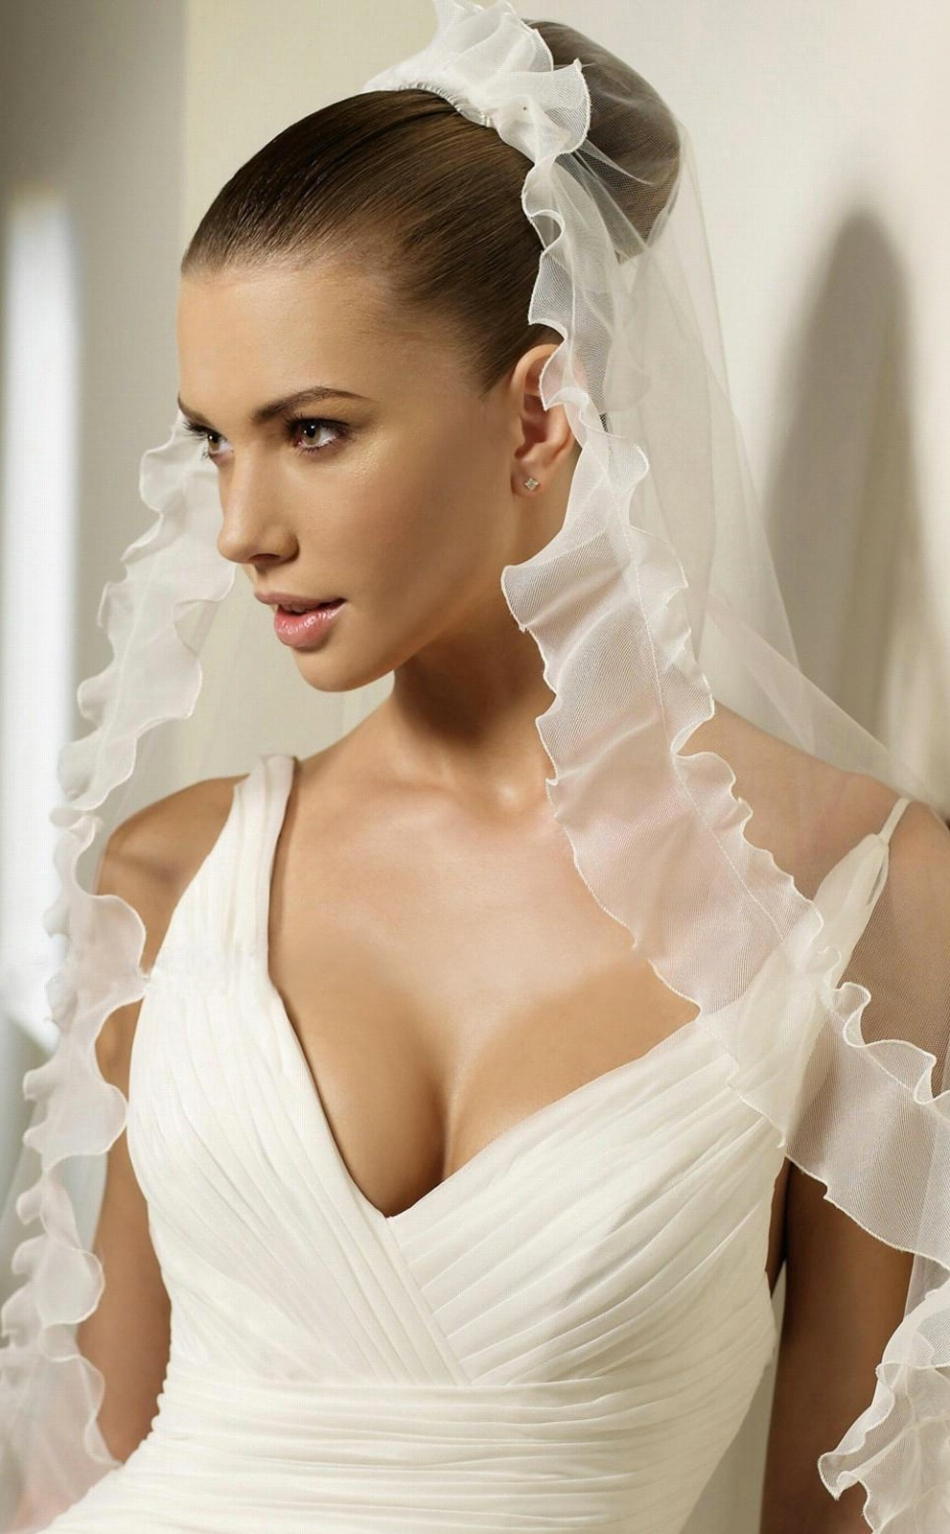 Download Bride, white dress, girl model 950x1534 wallpaper, iPhone, 950x153...